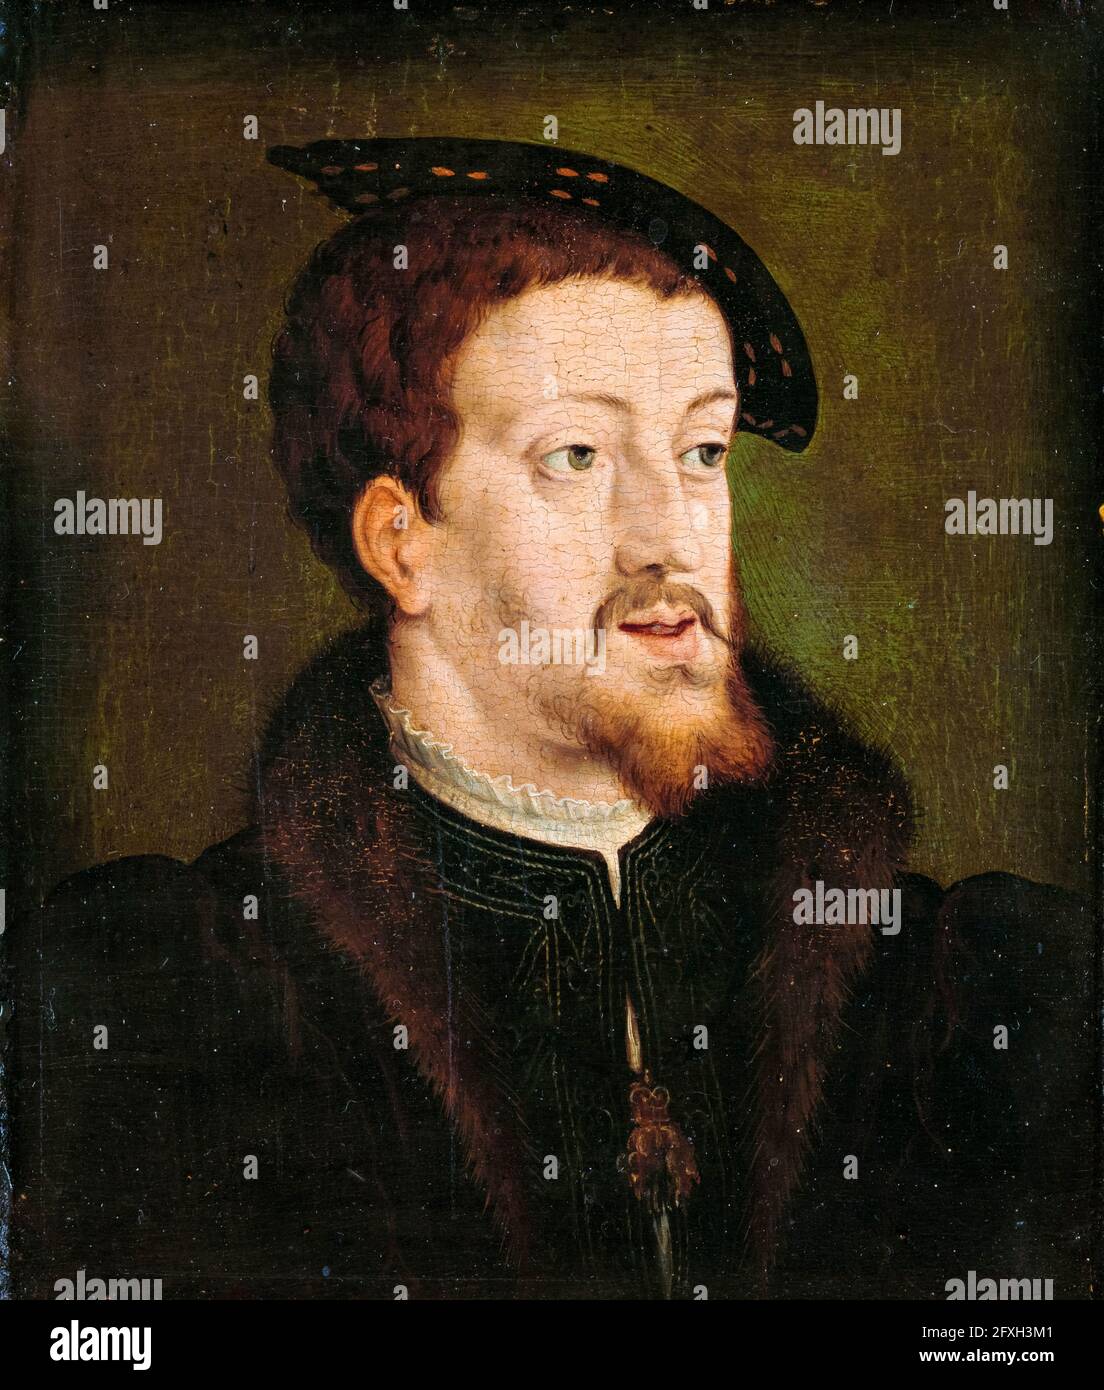 Charles V (1500-1558) Holy Roman Emperor 1519-1556, portrait painting after Jan Cornelisz Vermeyen, circa 1530 Stock Photo